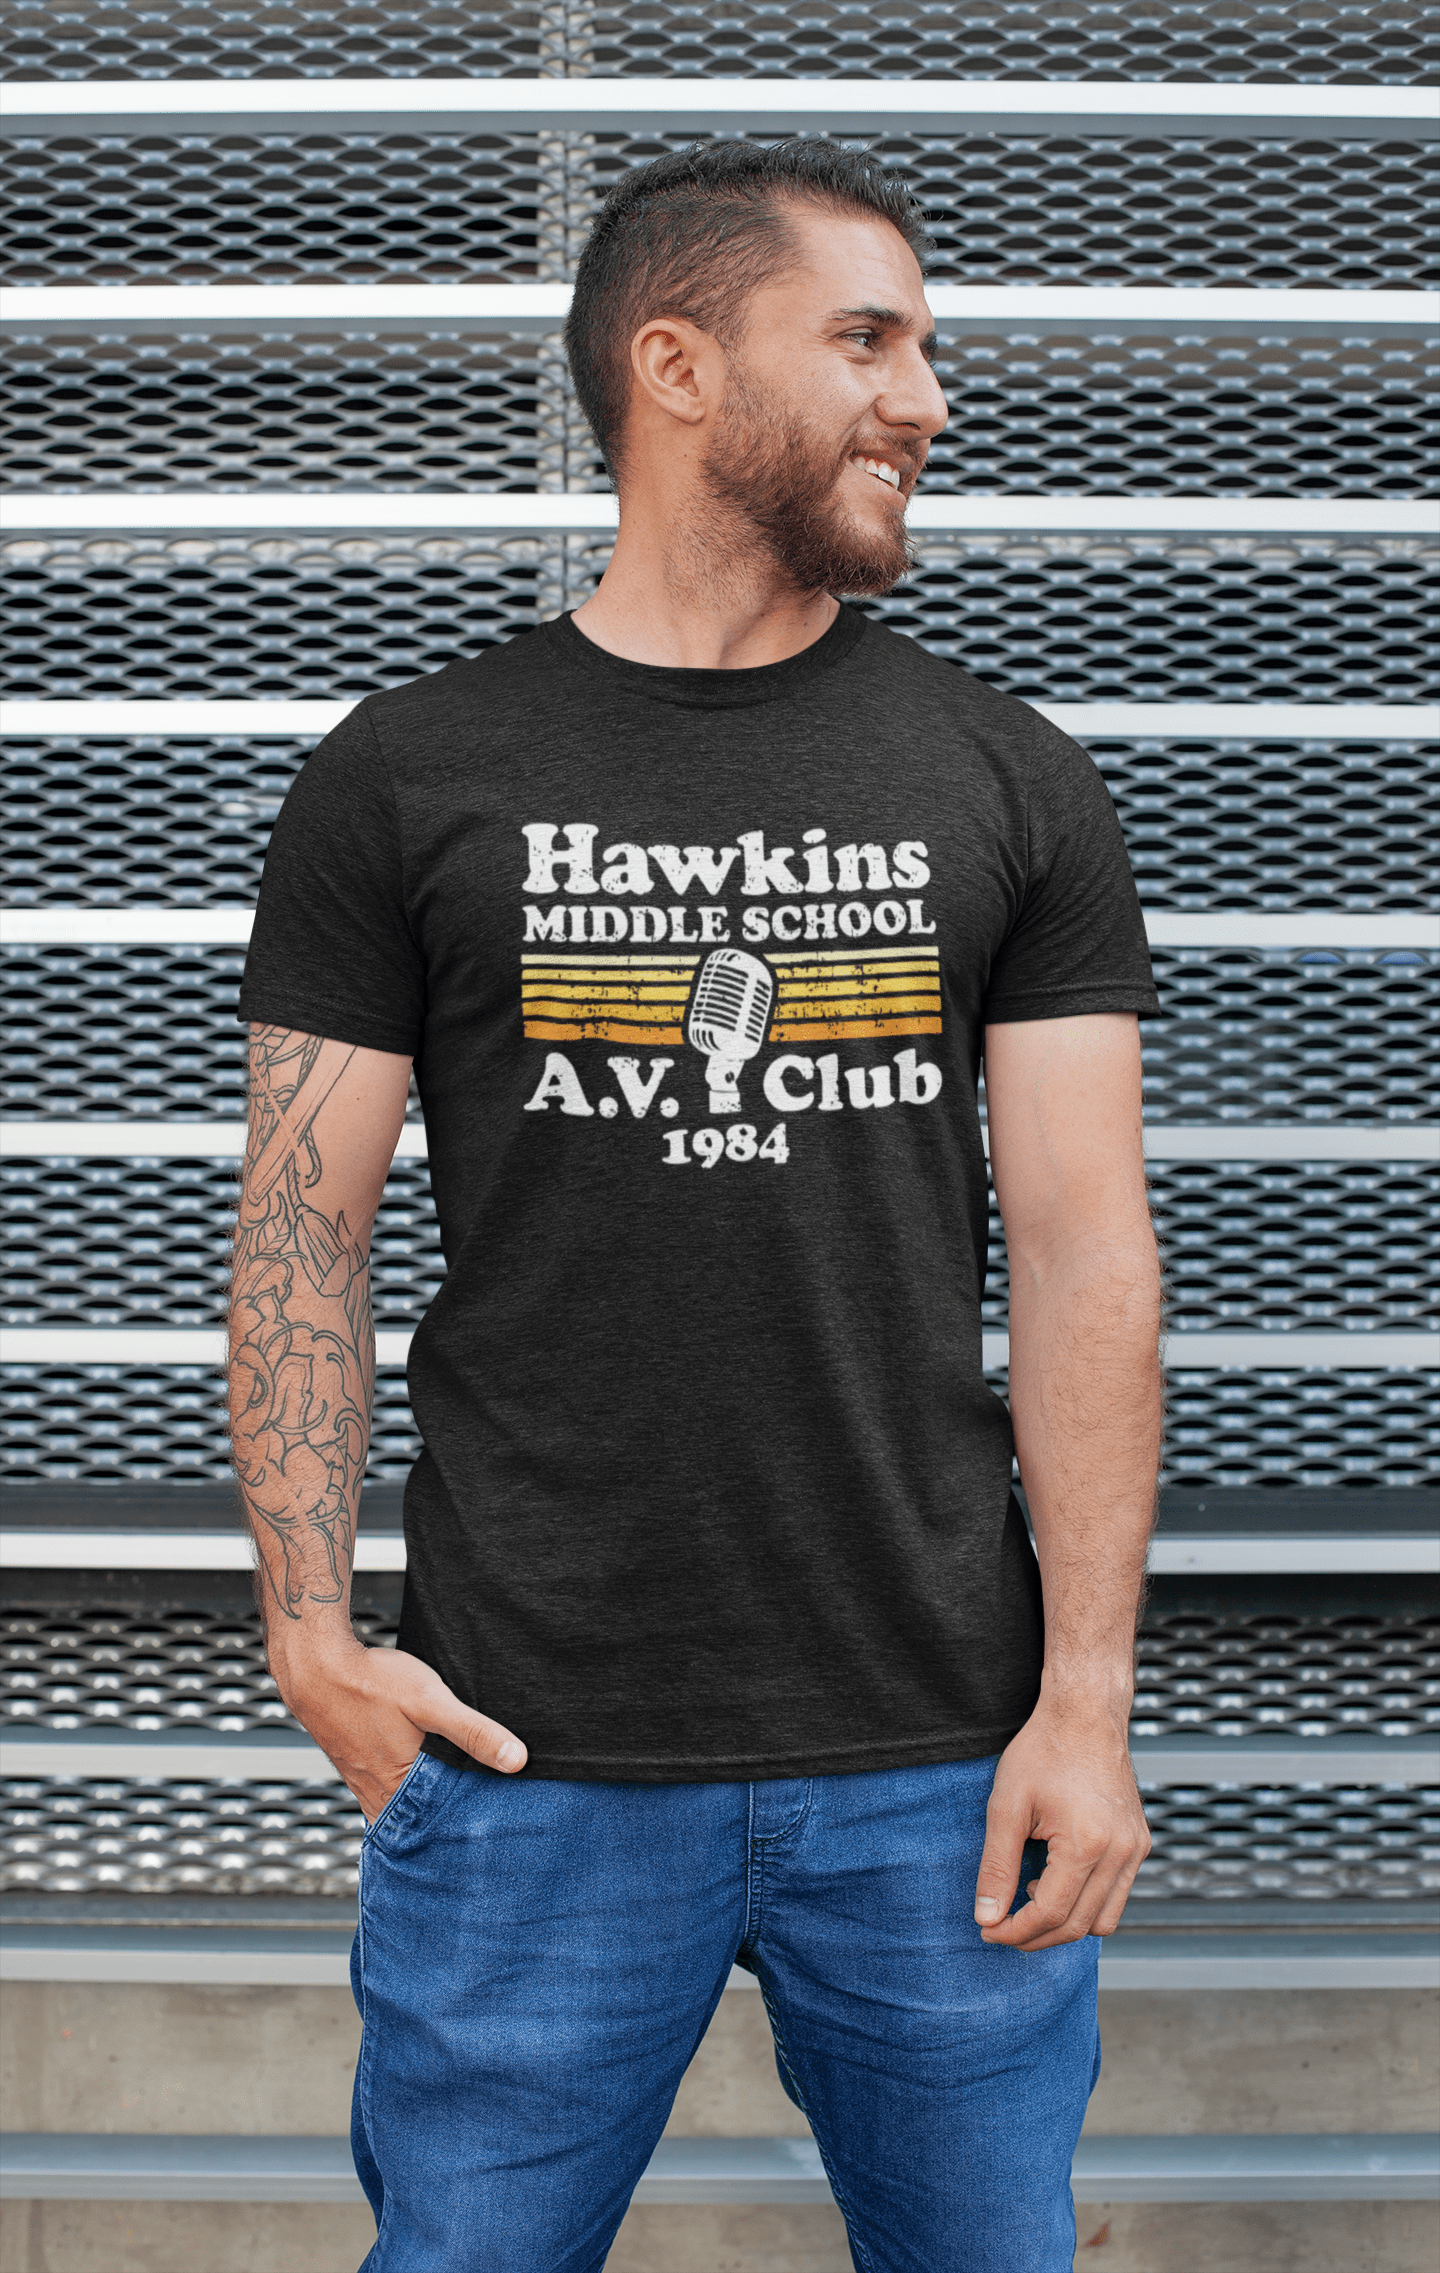 Ultrabasic - T-shirt imprimé Hawkins Middle School AV Club pour hommes